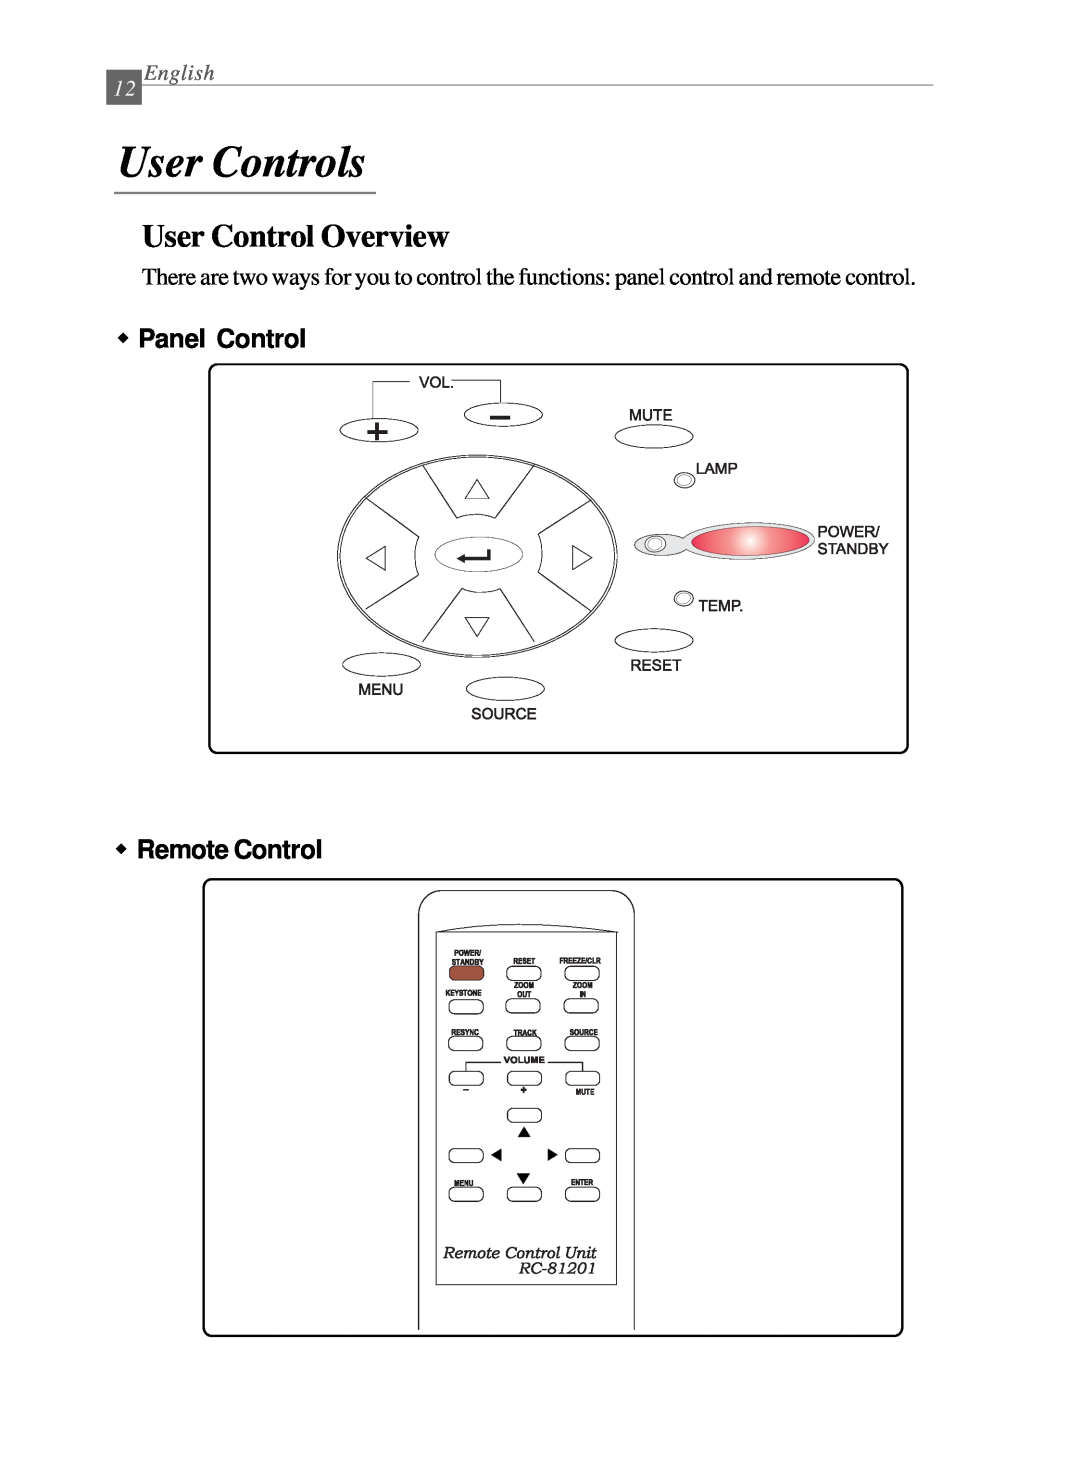 Dukane 28A8040 manual User Controls, User Control Overview, w Panel Control w Remote Control, English 